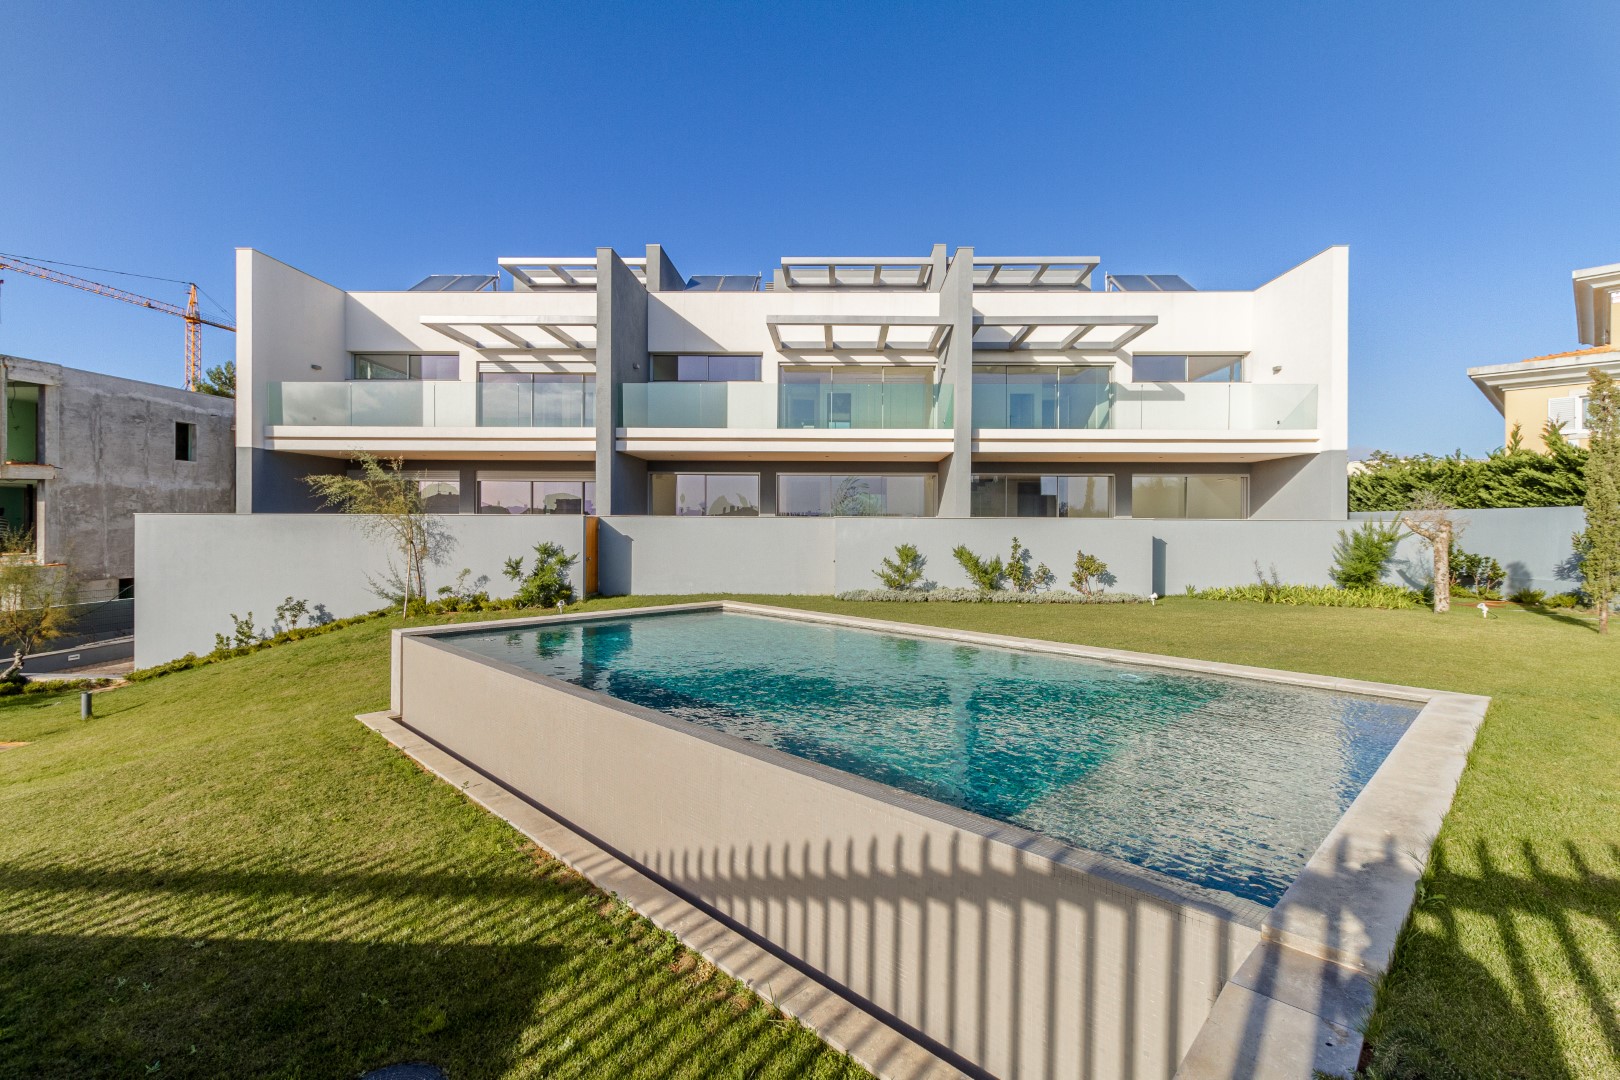 For Sale Detached Villa Cobre Cascais Portugal Mor4256ndf&C MOR4256ND 22